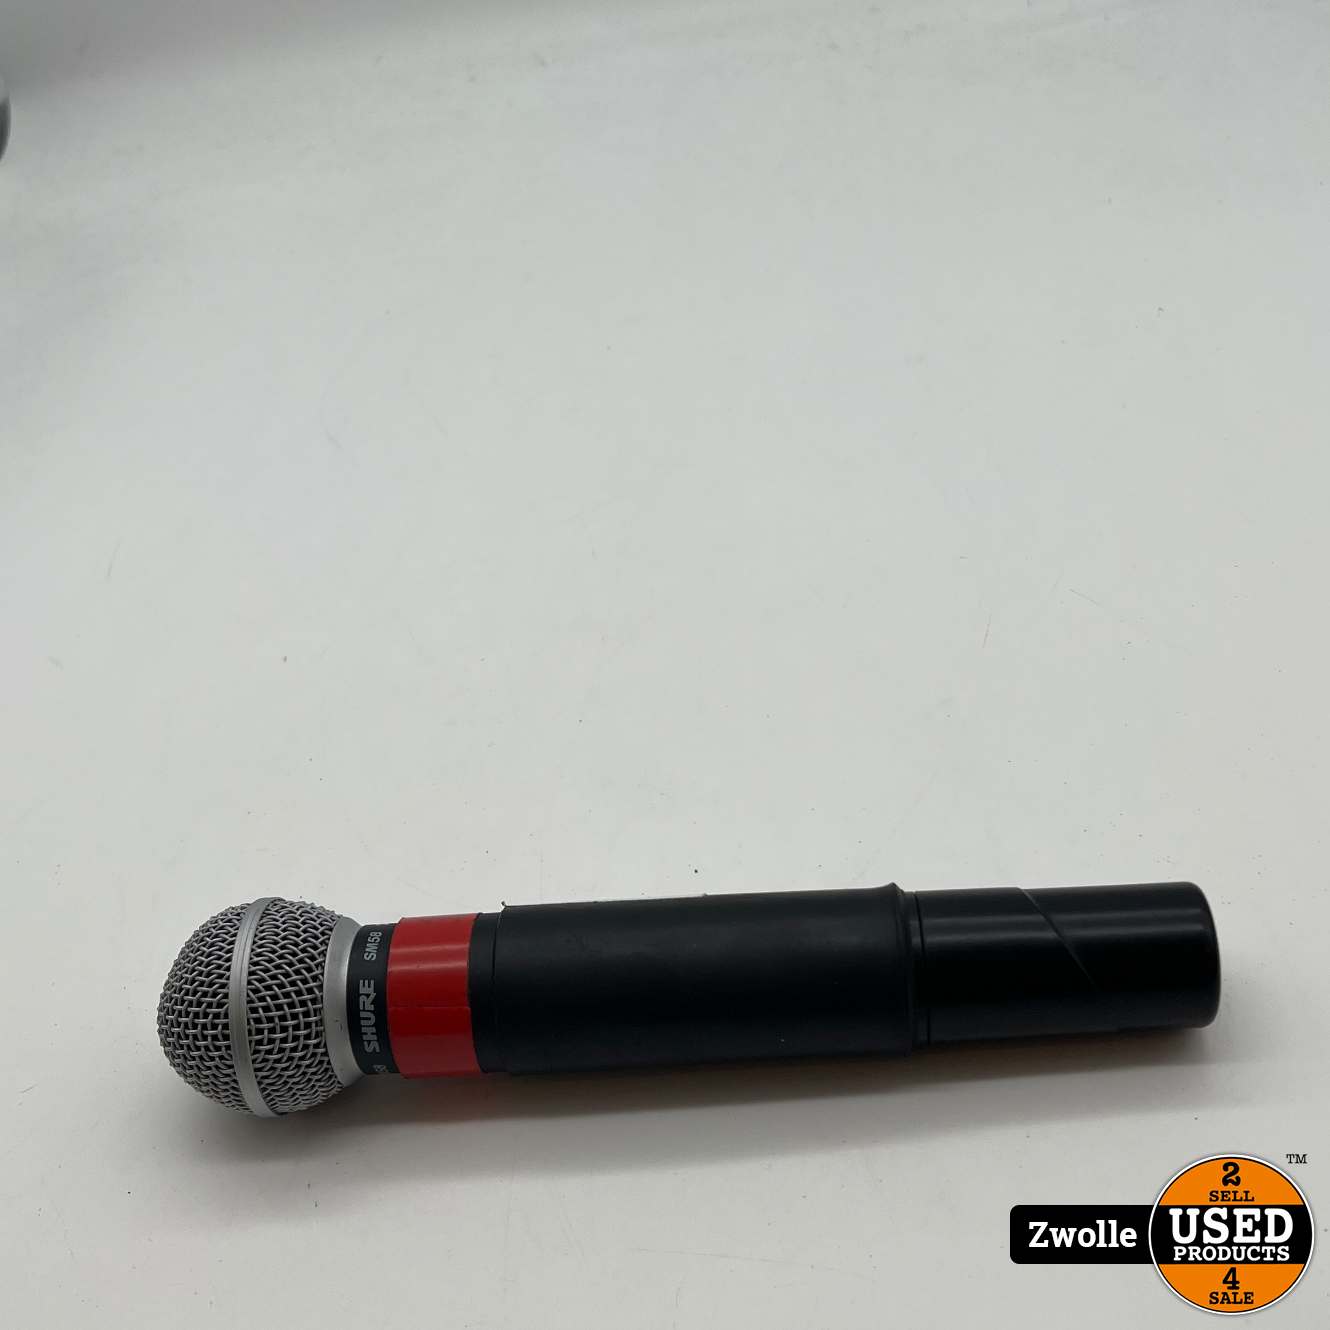 Missionaris kalender Verniel Shure SC2-CS draadloze SM58 microfoon met ontvanger - Used Products Zwolle